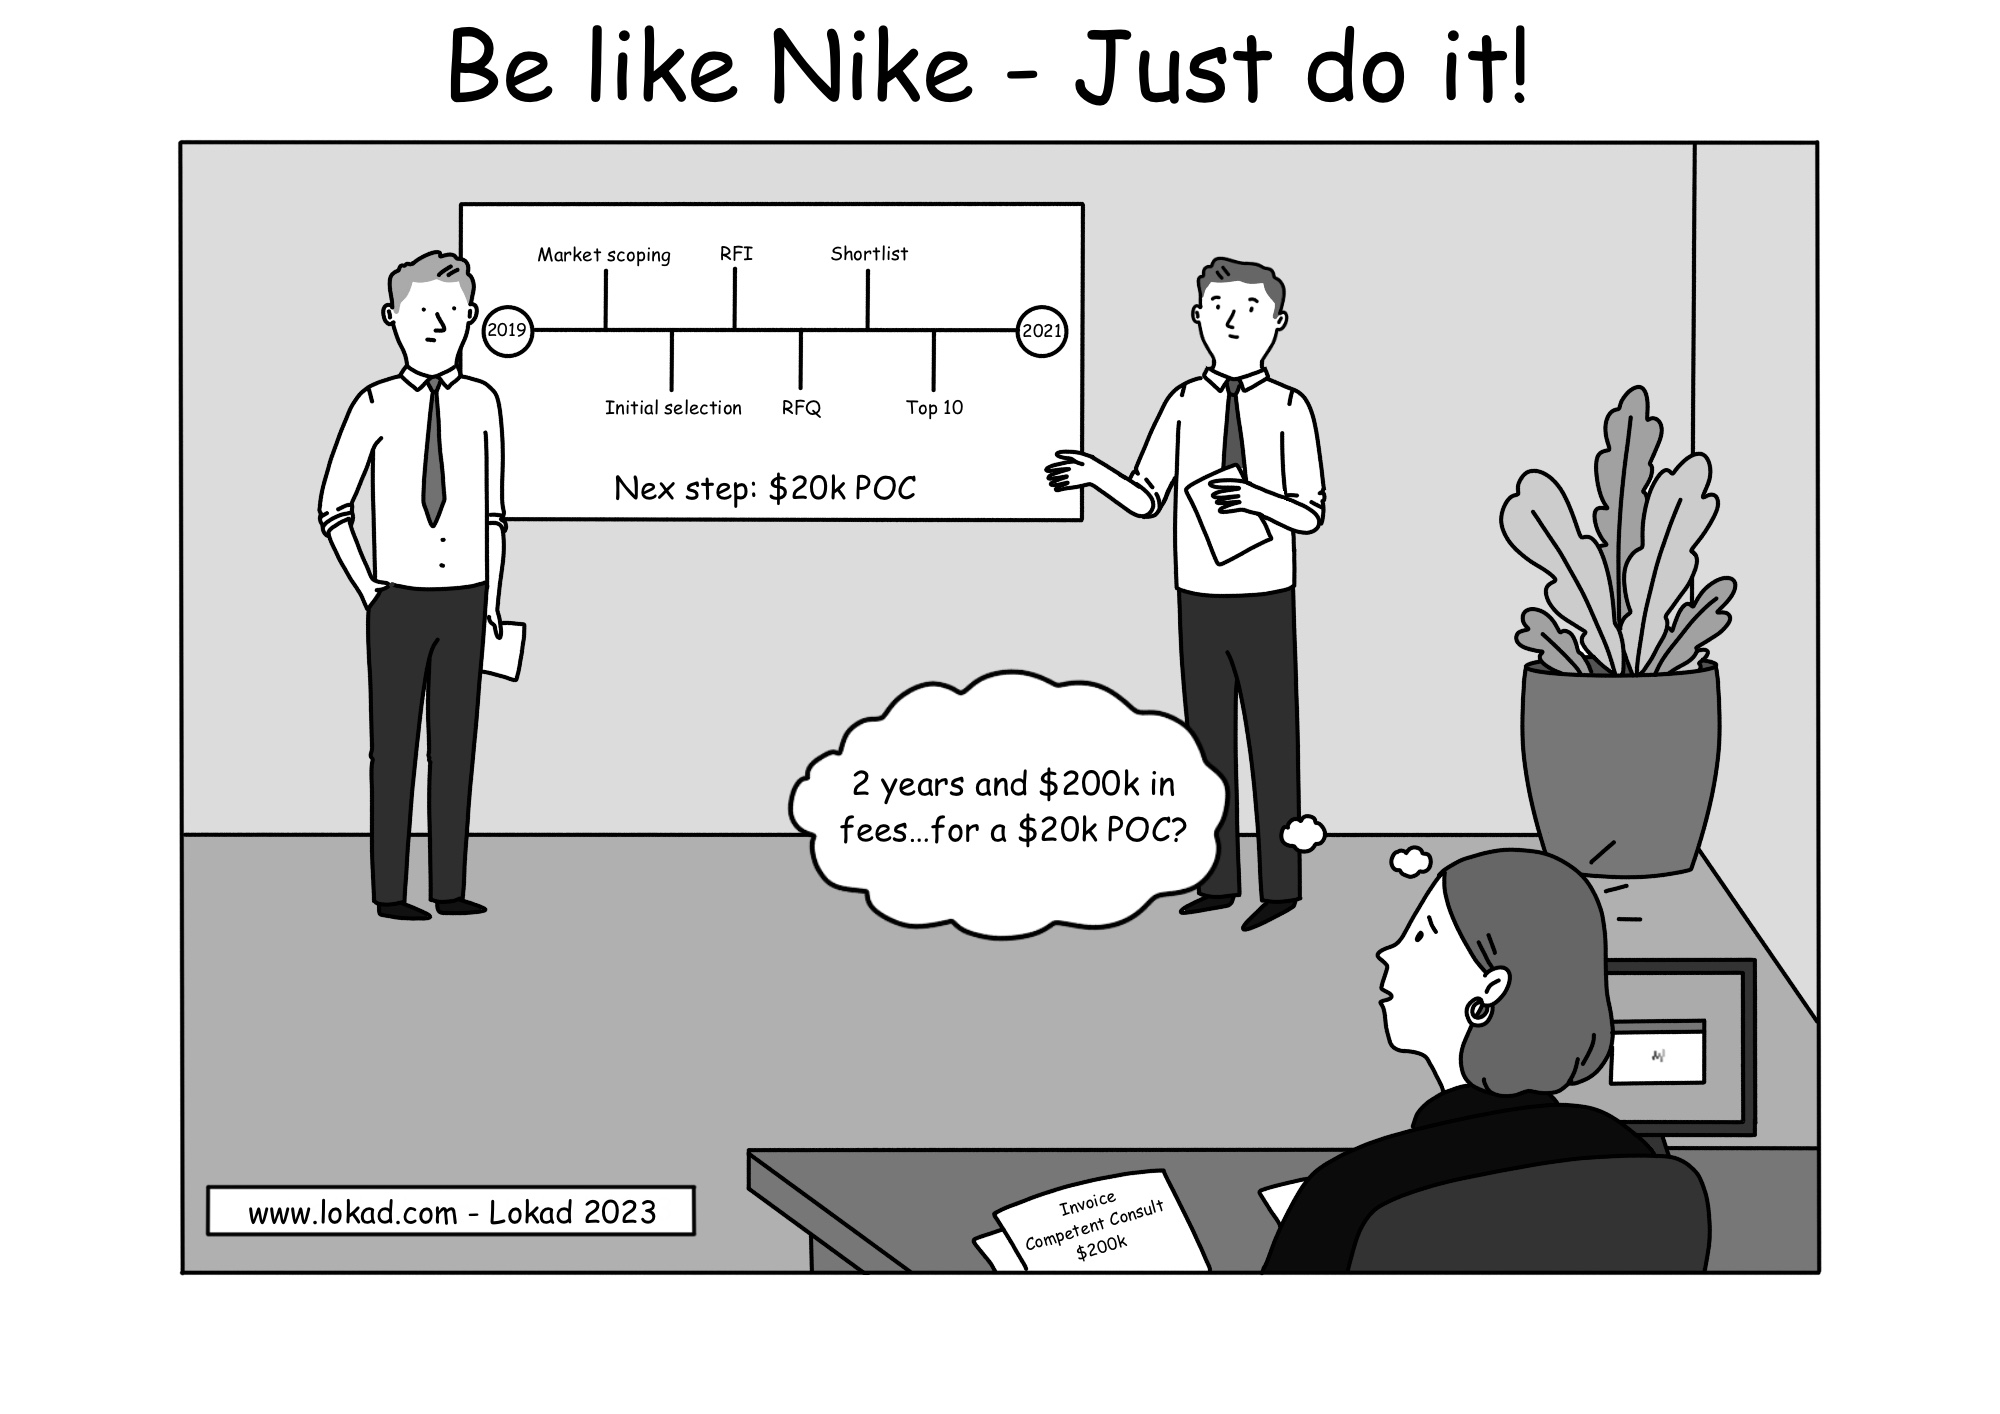 Be like Nike - just do it!